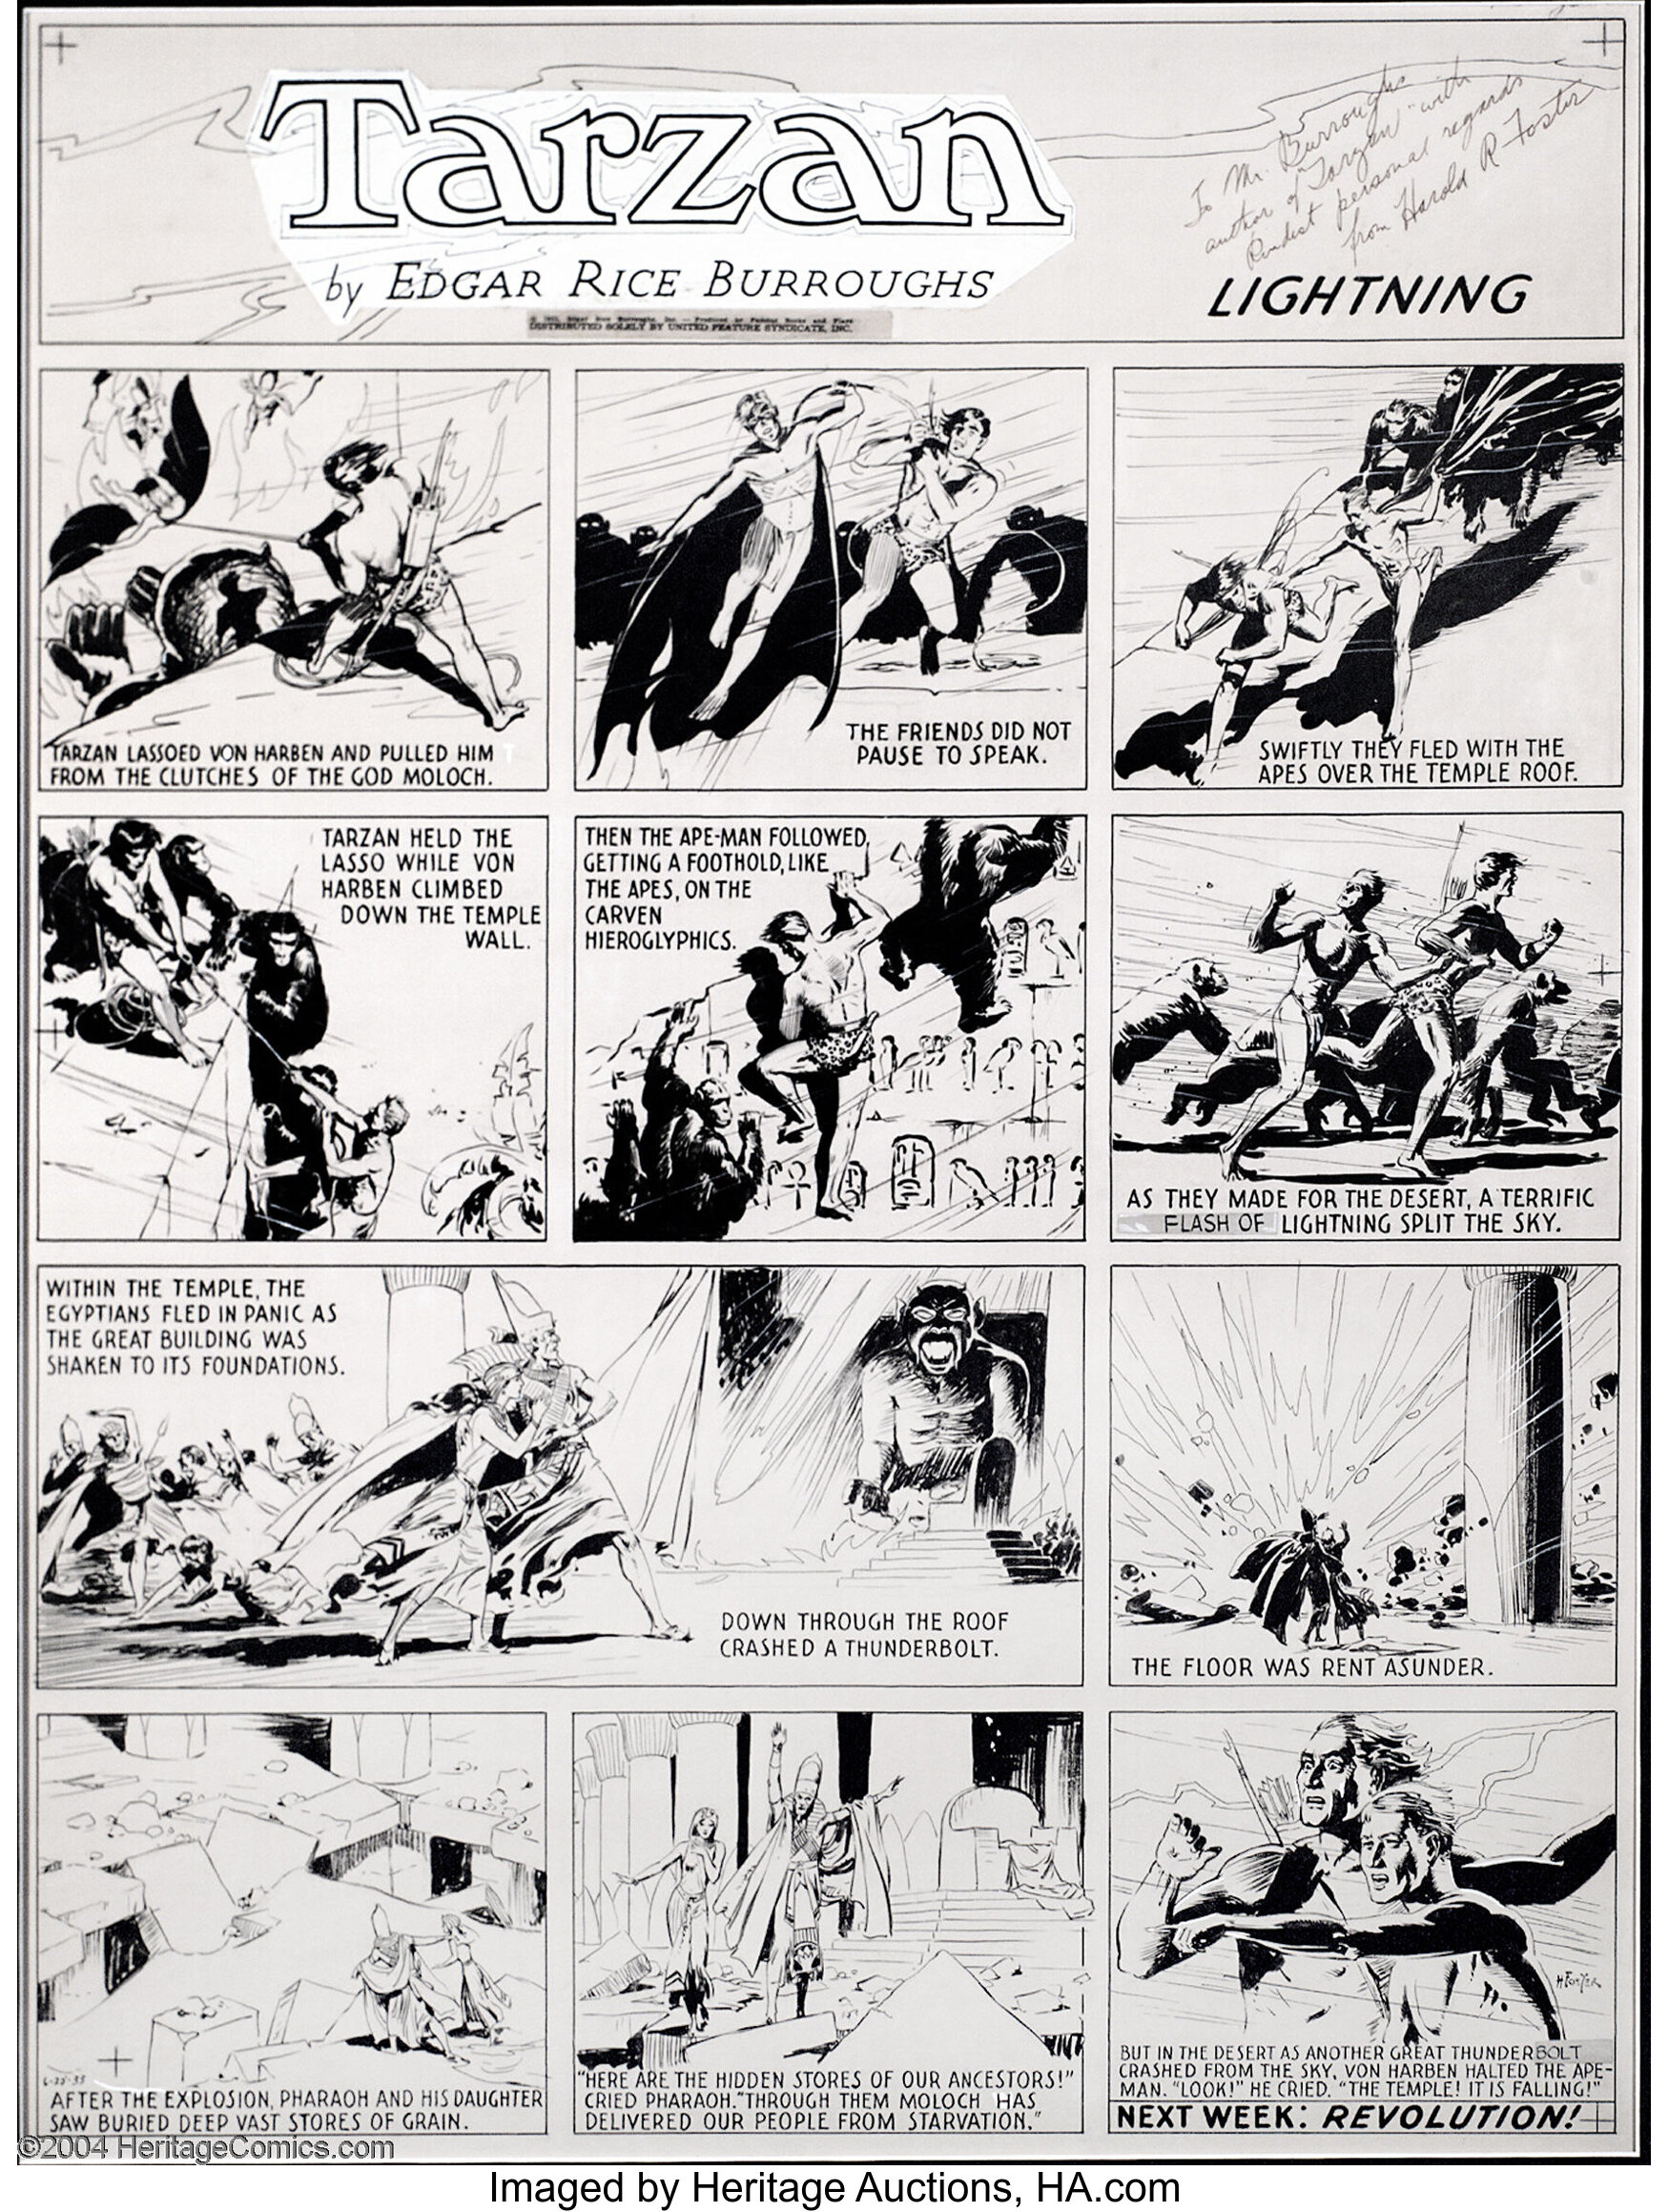 Hal Foster - Tarzan Sunday Original Art Comic Strip Art, dated | Lot #5016  | Heritage Auctions